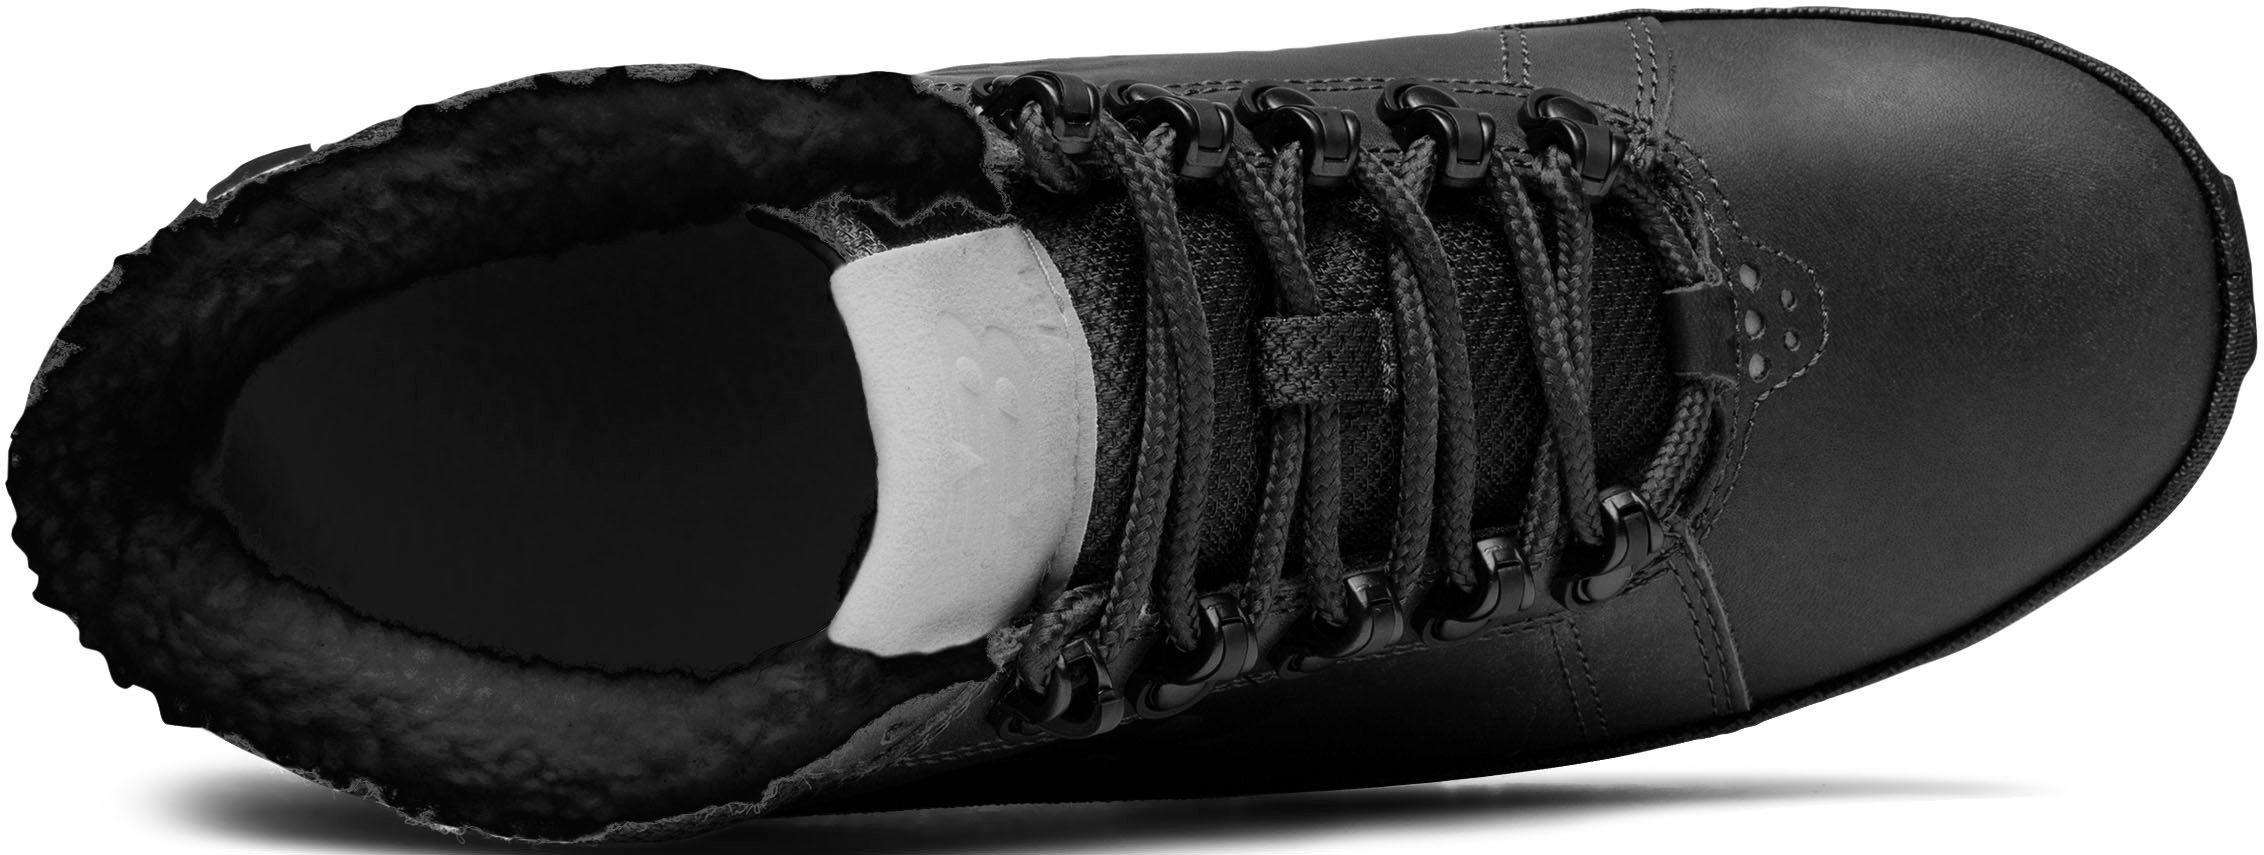 Balance 754 schwarz Sneaker New